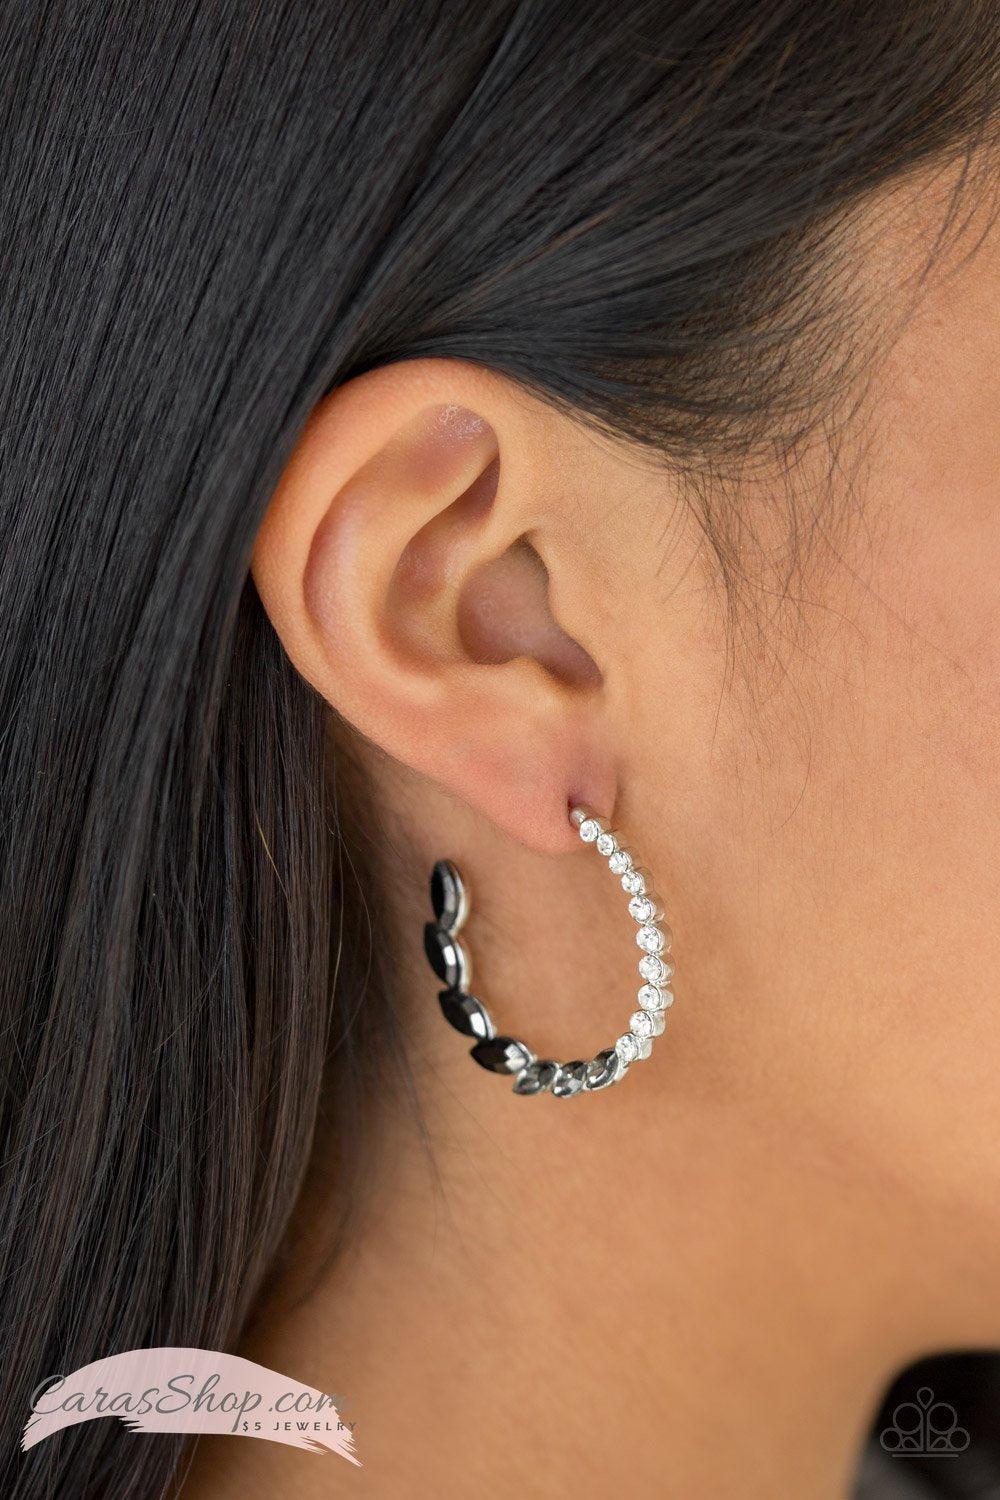 Prime Time Princess - Black Rhinestone Hoop Earrings - Paparazzi Accessories-CarasShop.com - $5 Jewelry by Cara Jewels